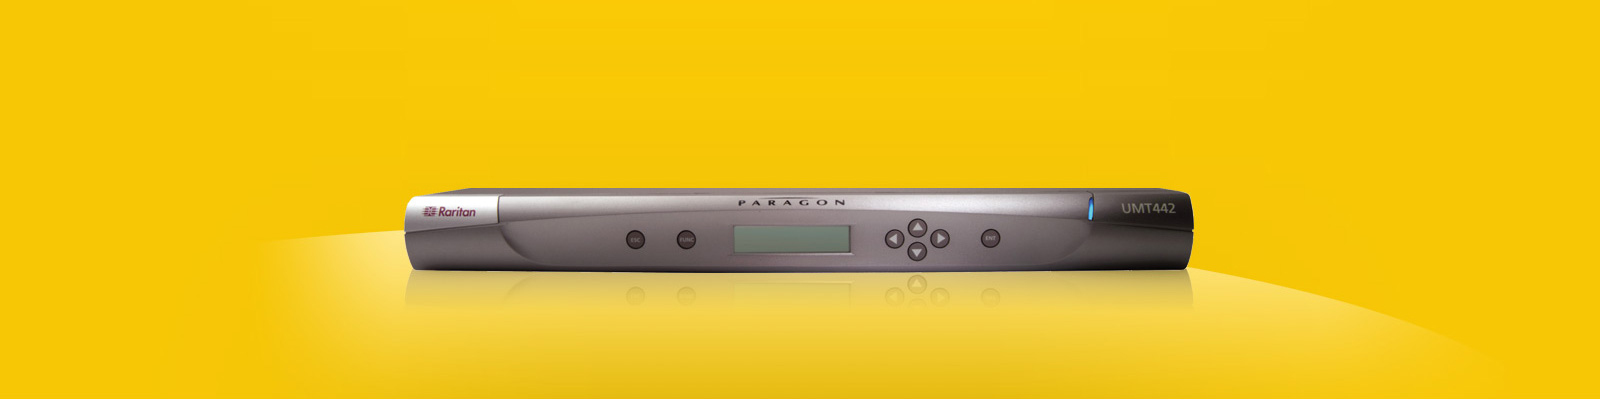 Raritan Paragon 4 User, 42 Port High Density CATx KVM Switch - Multi-Platform: PS/2, USB, Sun and SGI